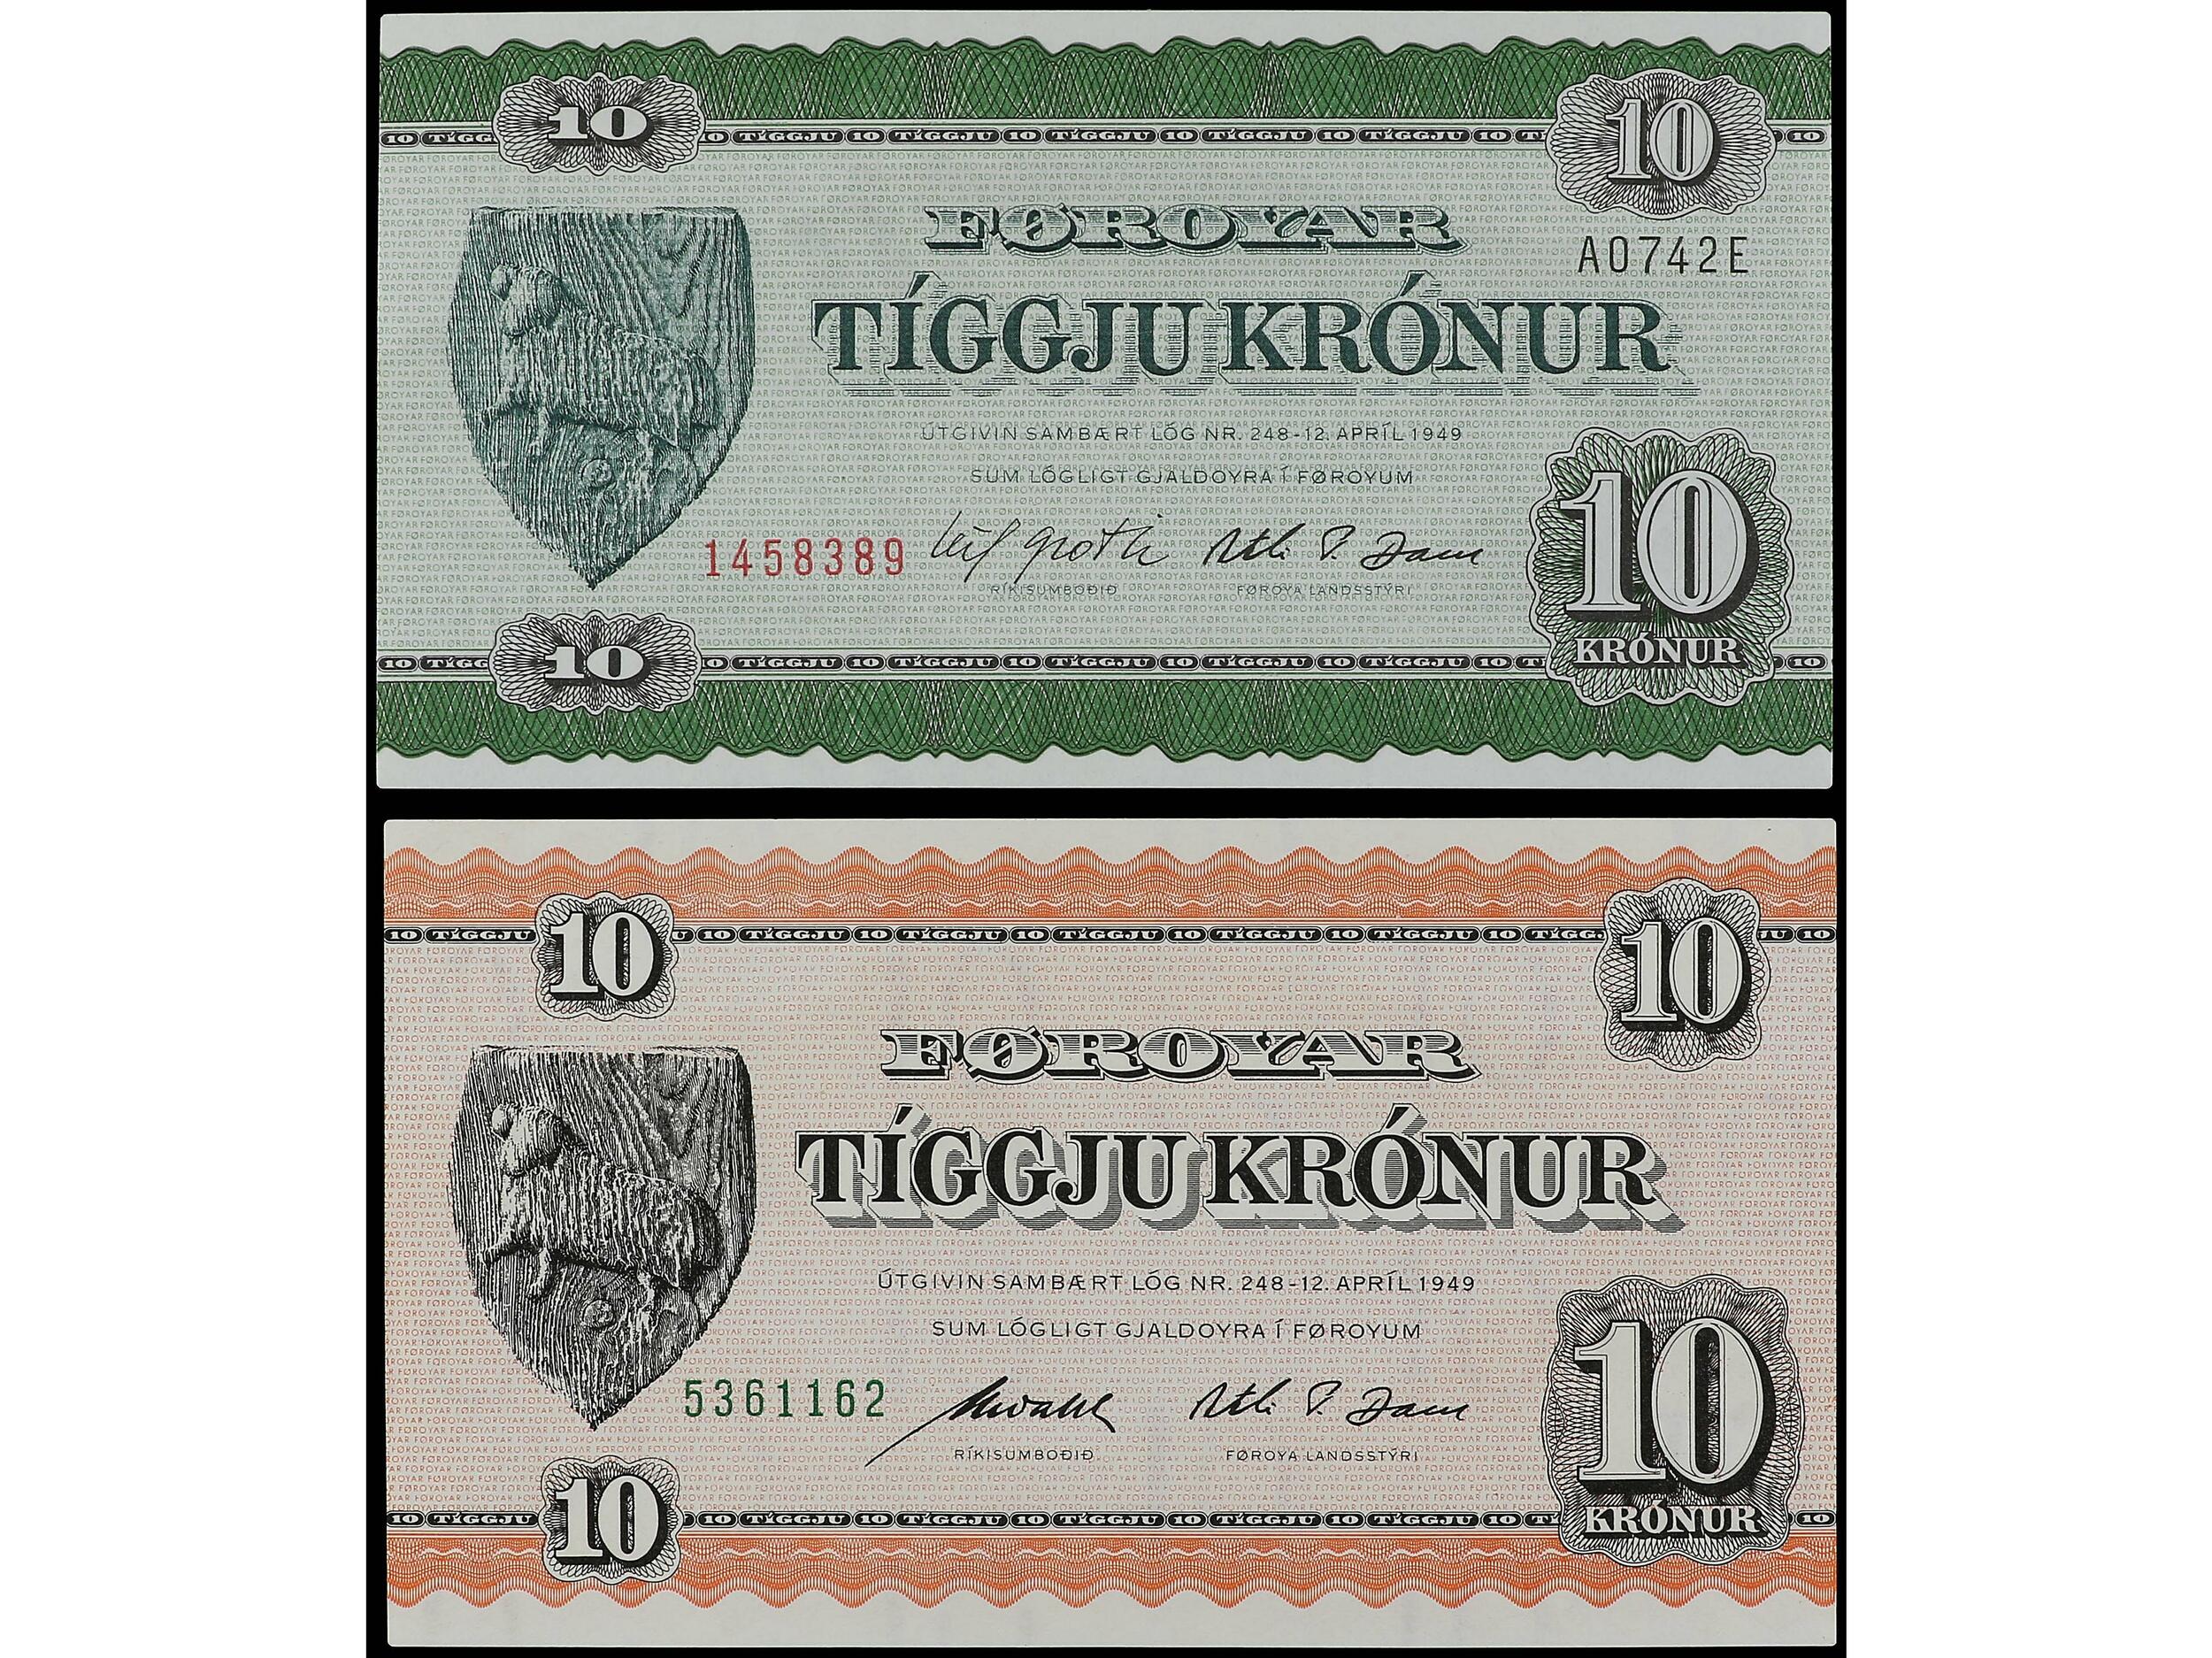 110.70: Banknoten - Dänemark